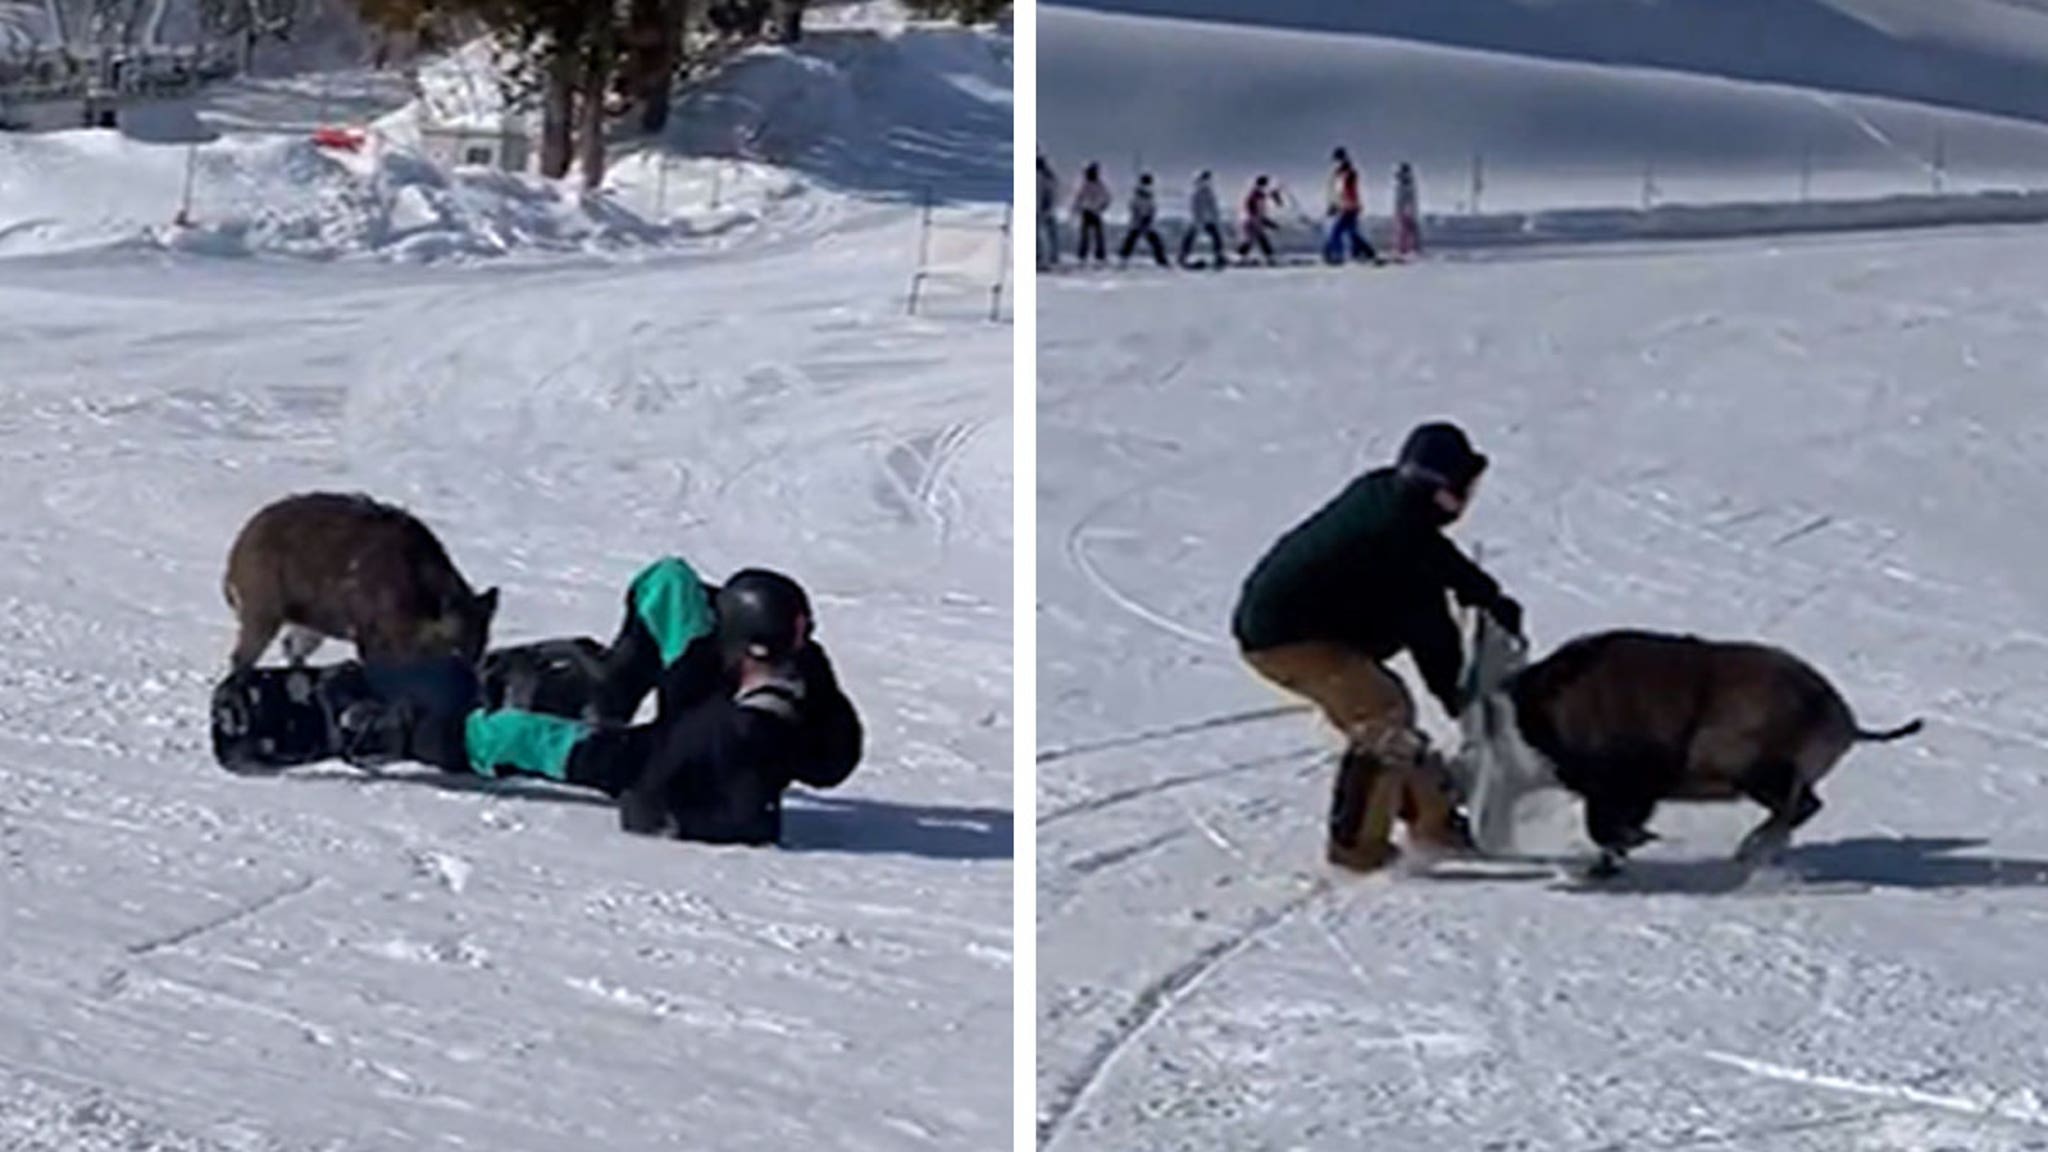 Boar Attacks Snowboarder at Resort in Japan, Wild Video